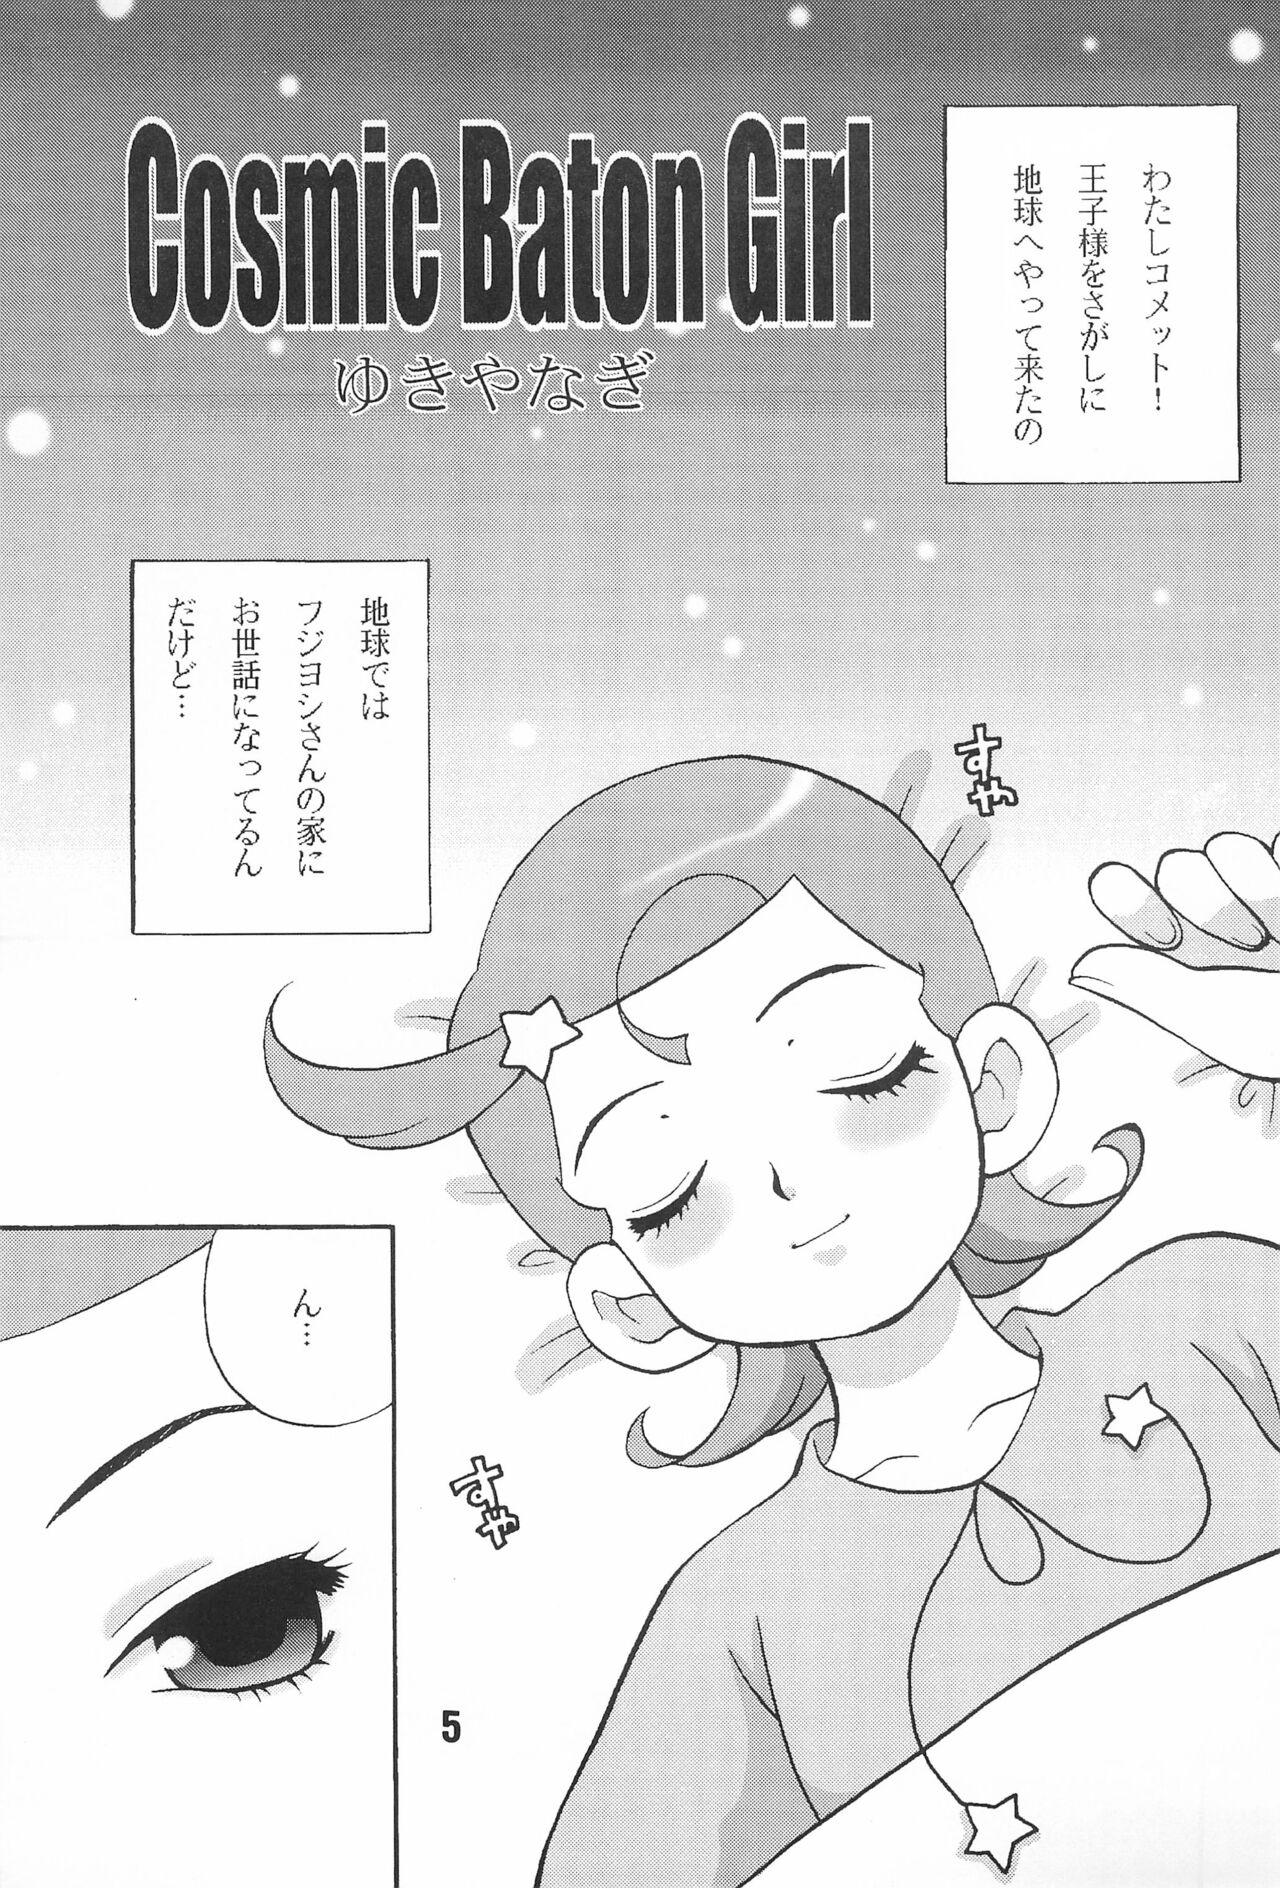 Wet Pussy Yukiyanagi no Hon 3 - Cosmic baton girl comet san Masterbation - Page 5